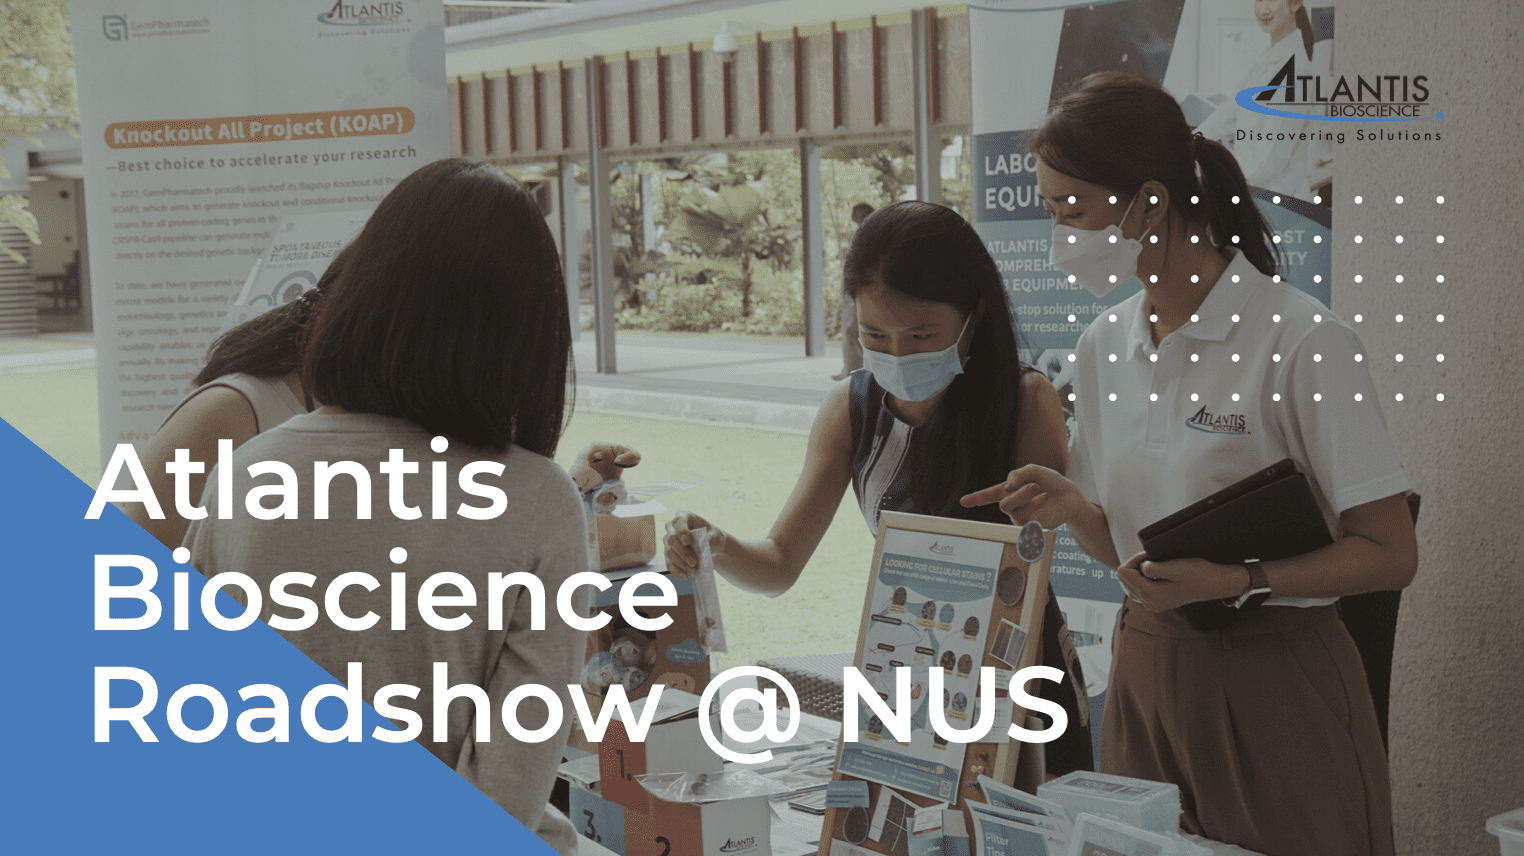 Atlantis-Bioscience-Roadshow-at-NUS-copy